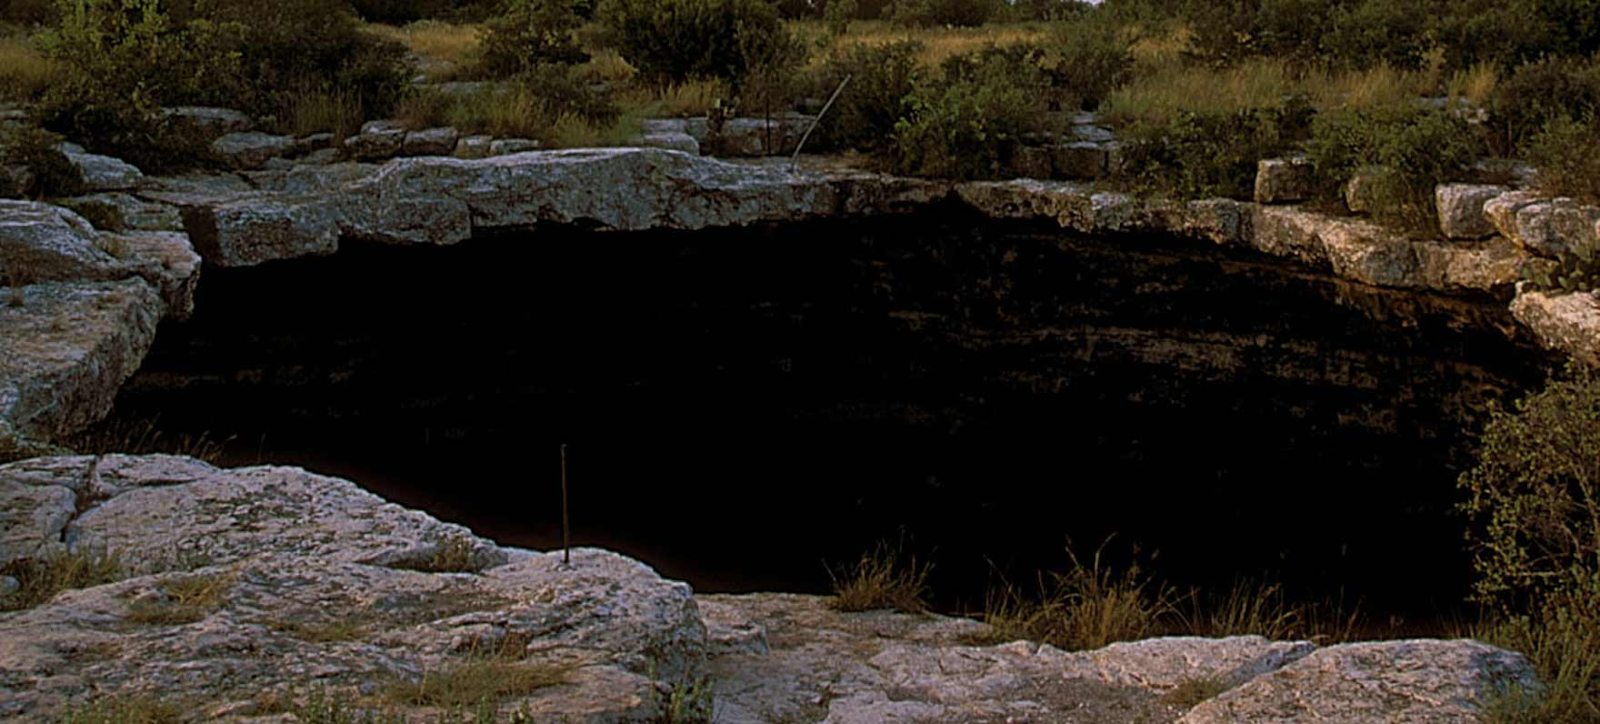 Devil's Sinkhole Cavern